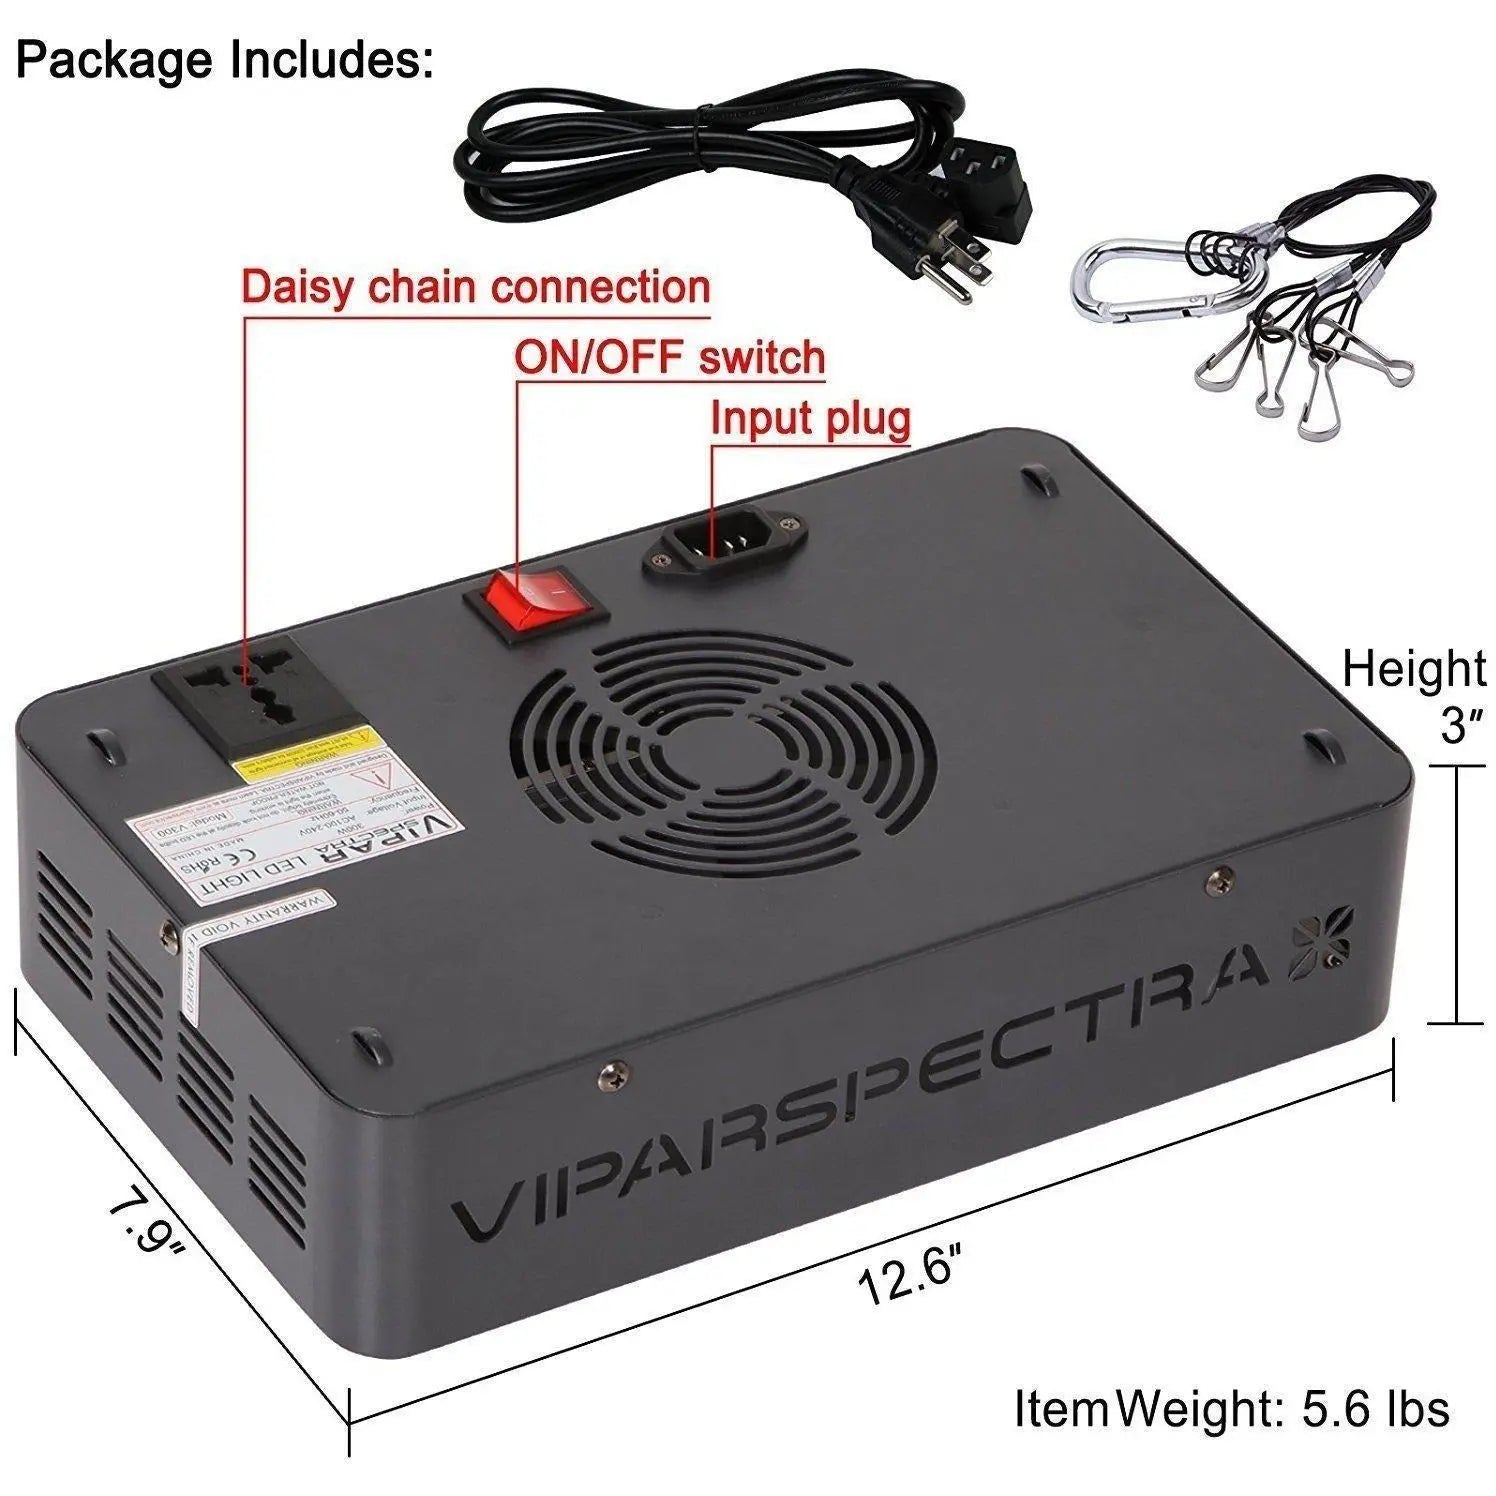 VIPARSPECTRA V300 LED Grow Light Reflector Series Vipar Spectra